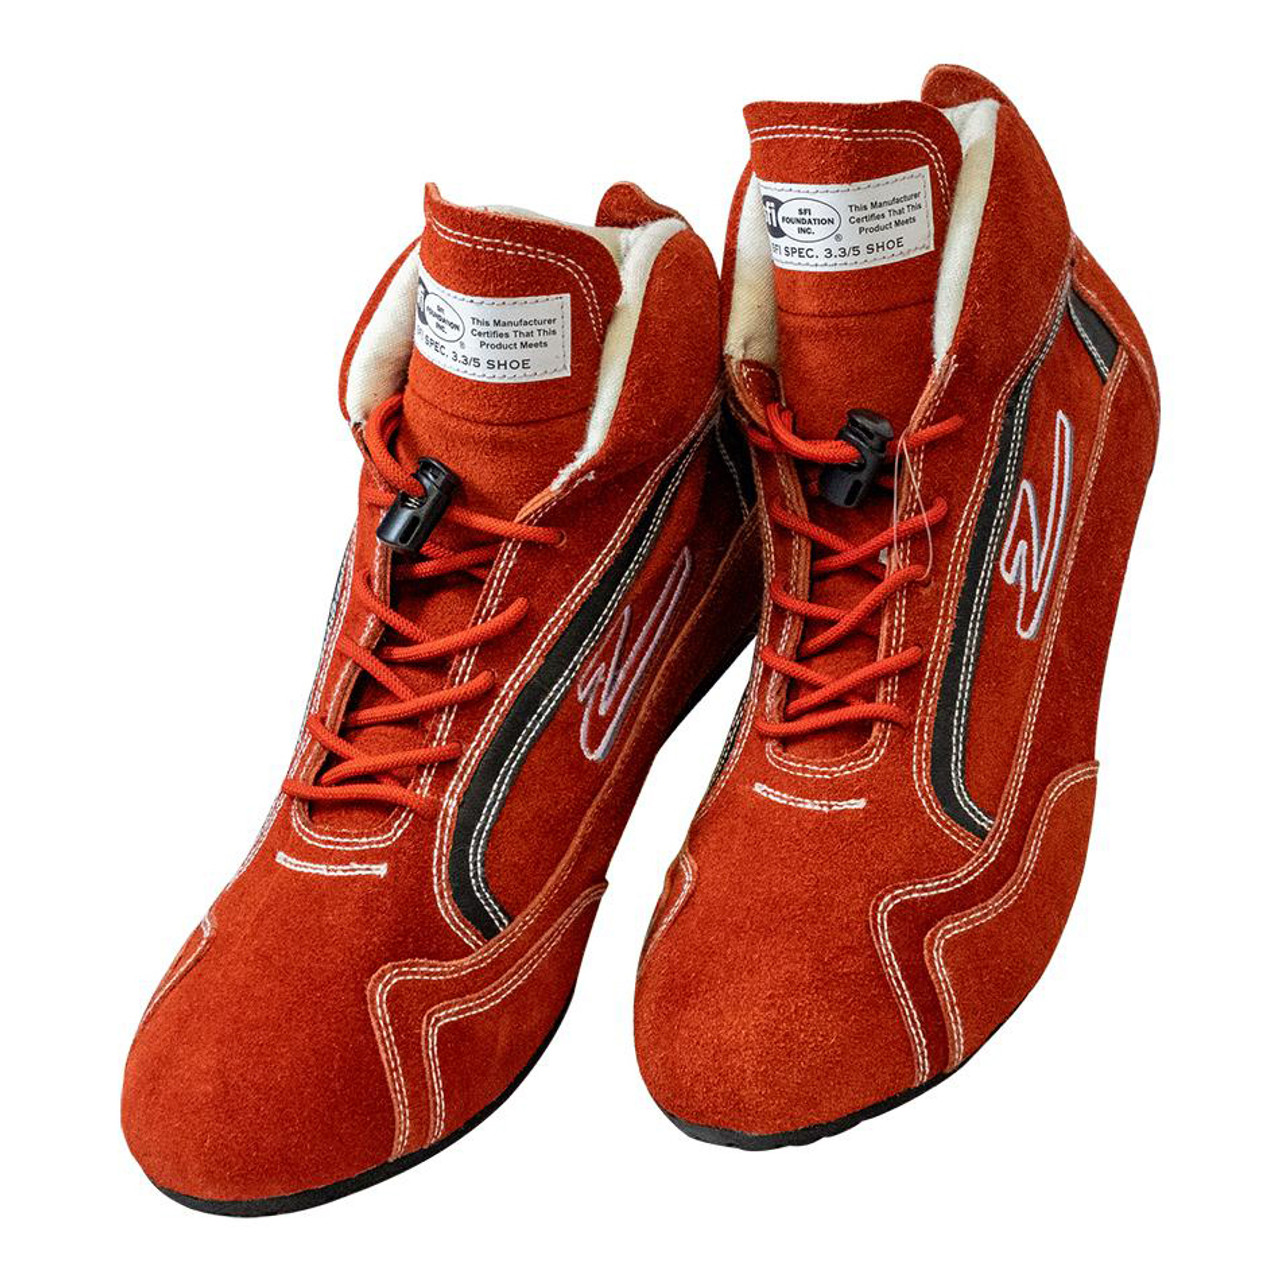 Shoe ZR-30 Red Size 10 SFI 3.3/5